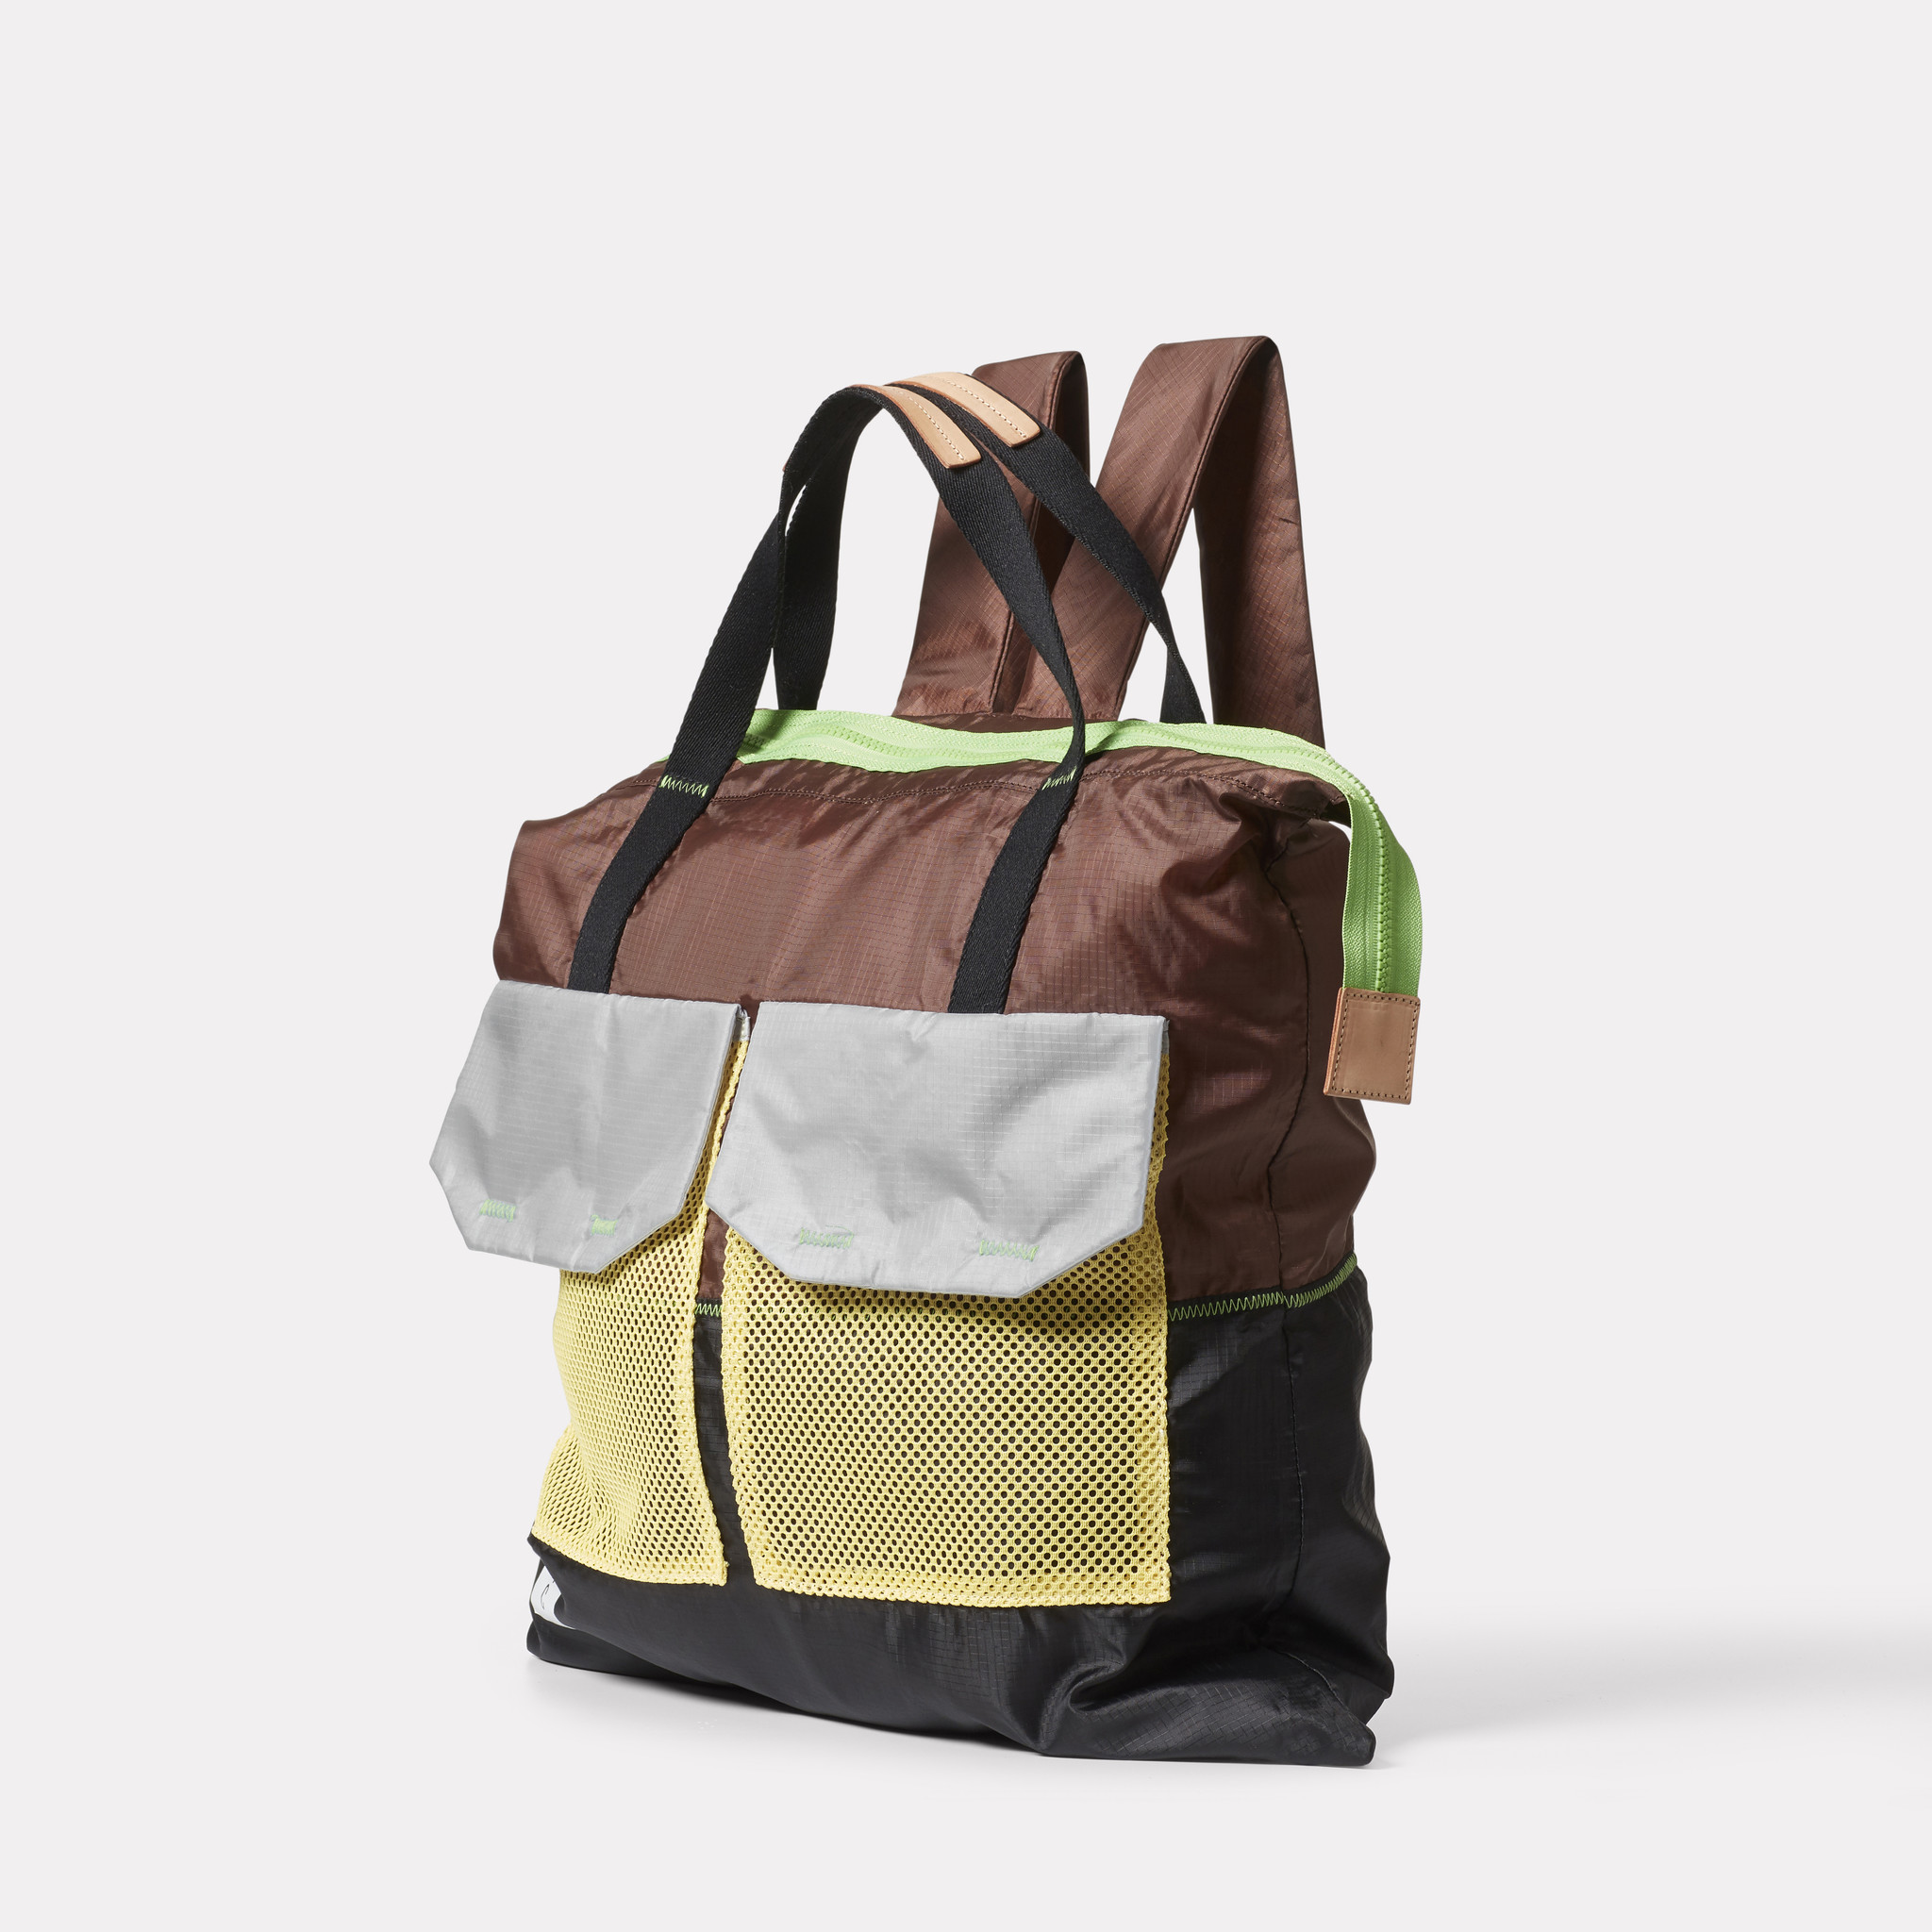 Ally Capellino Hank Packable Zip Top Tote/Backpack